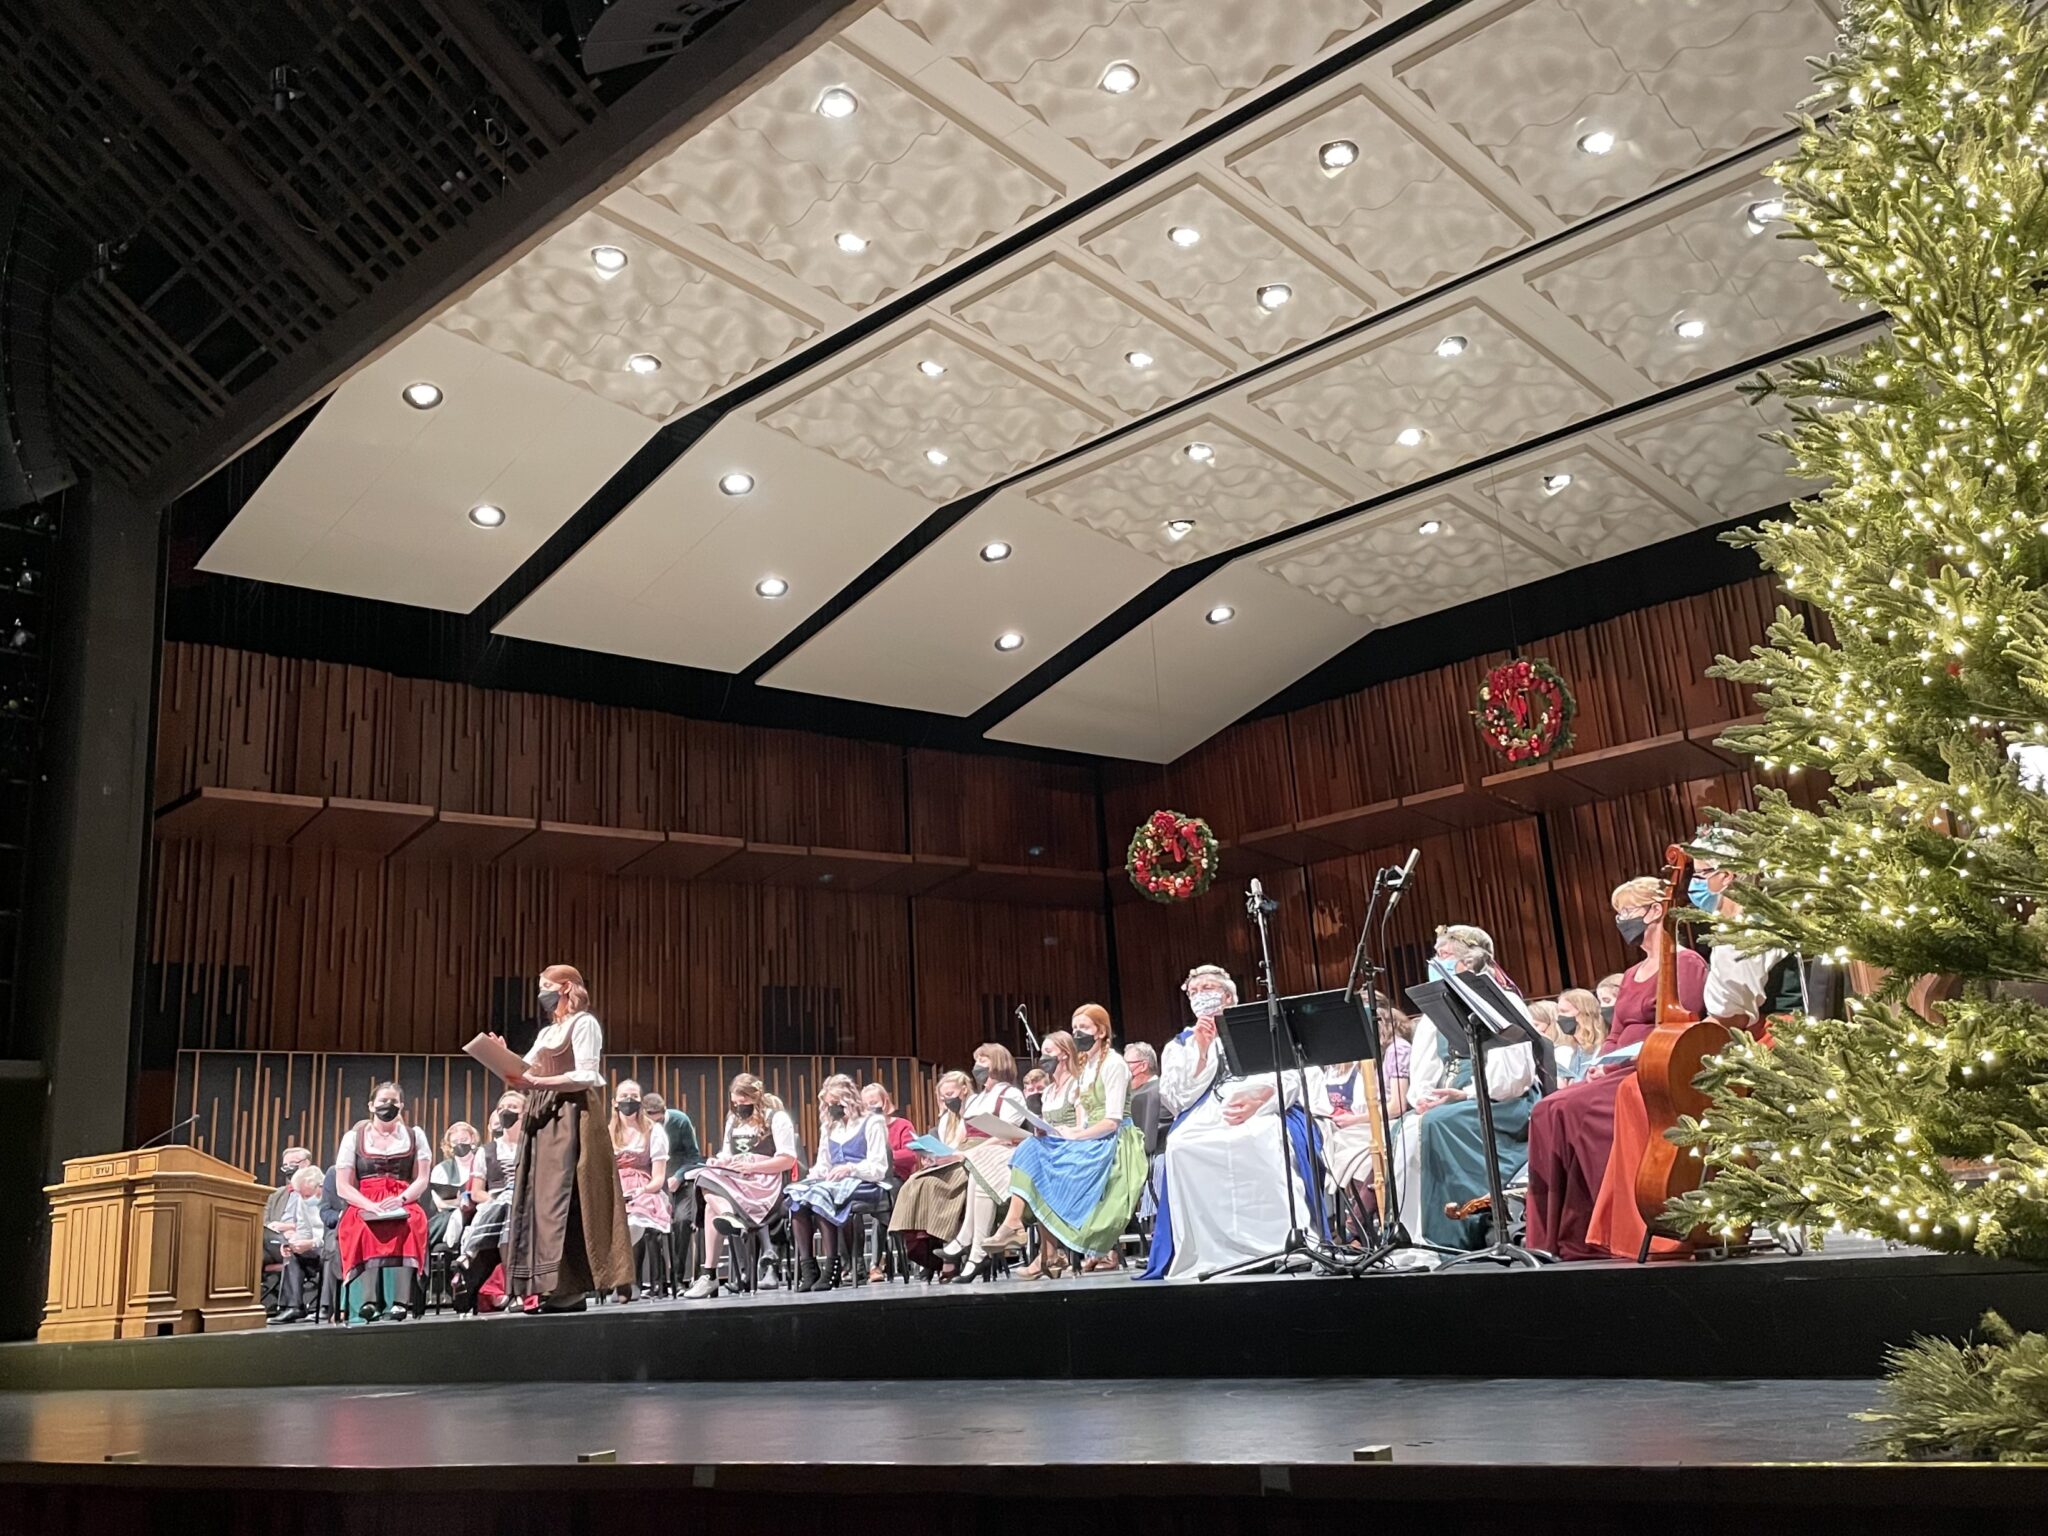 Adventsingen brings Christmas cheer to the community